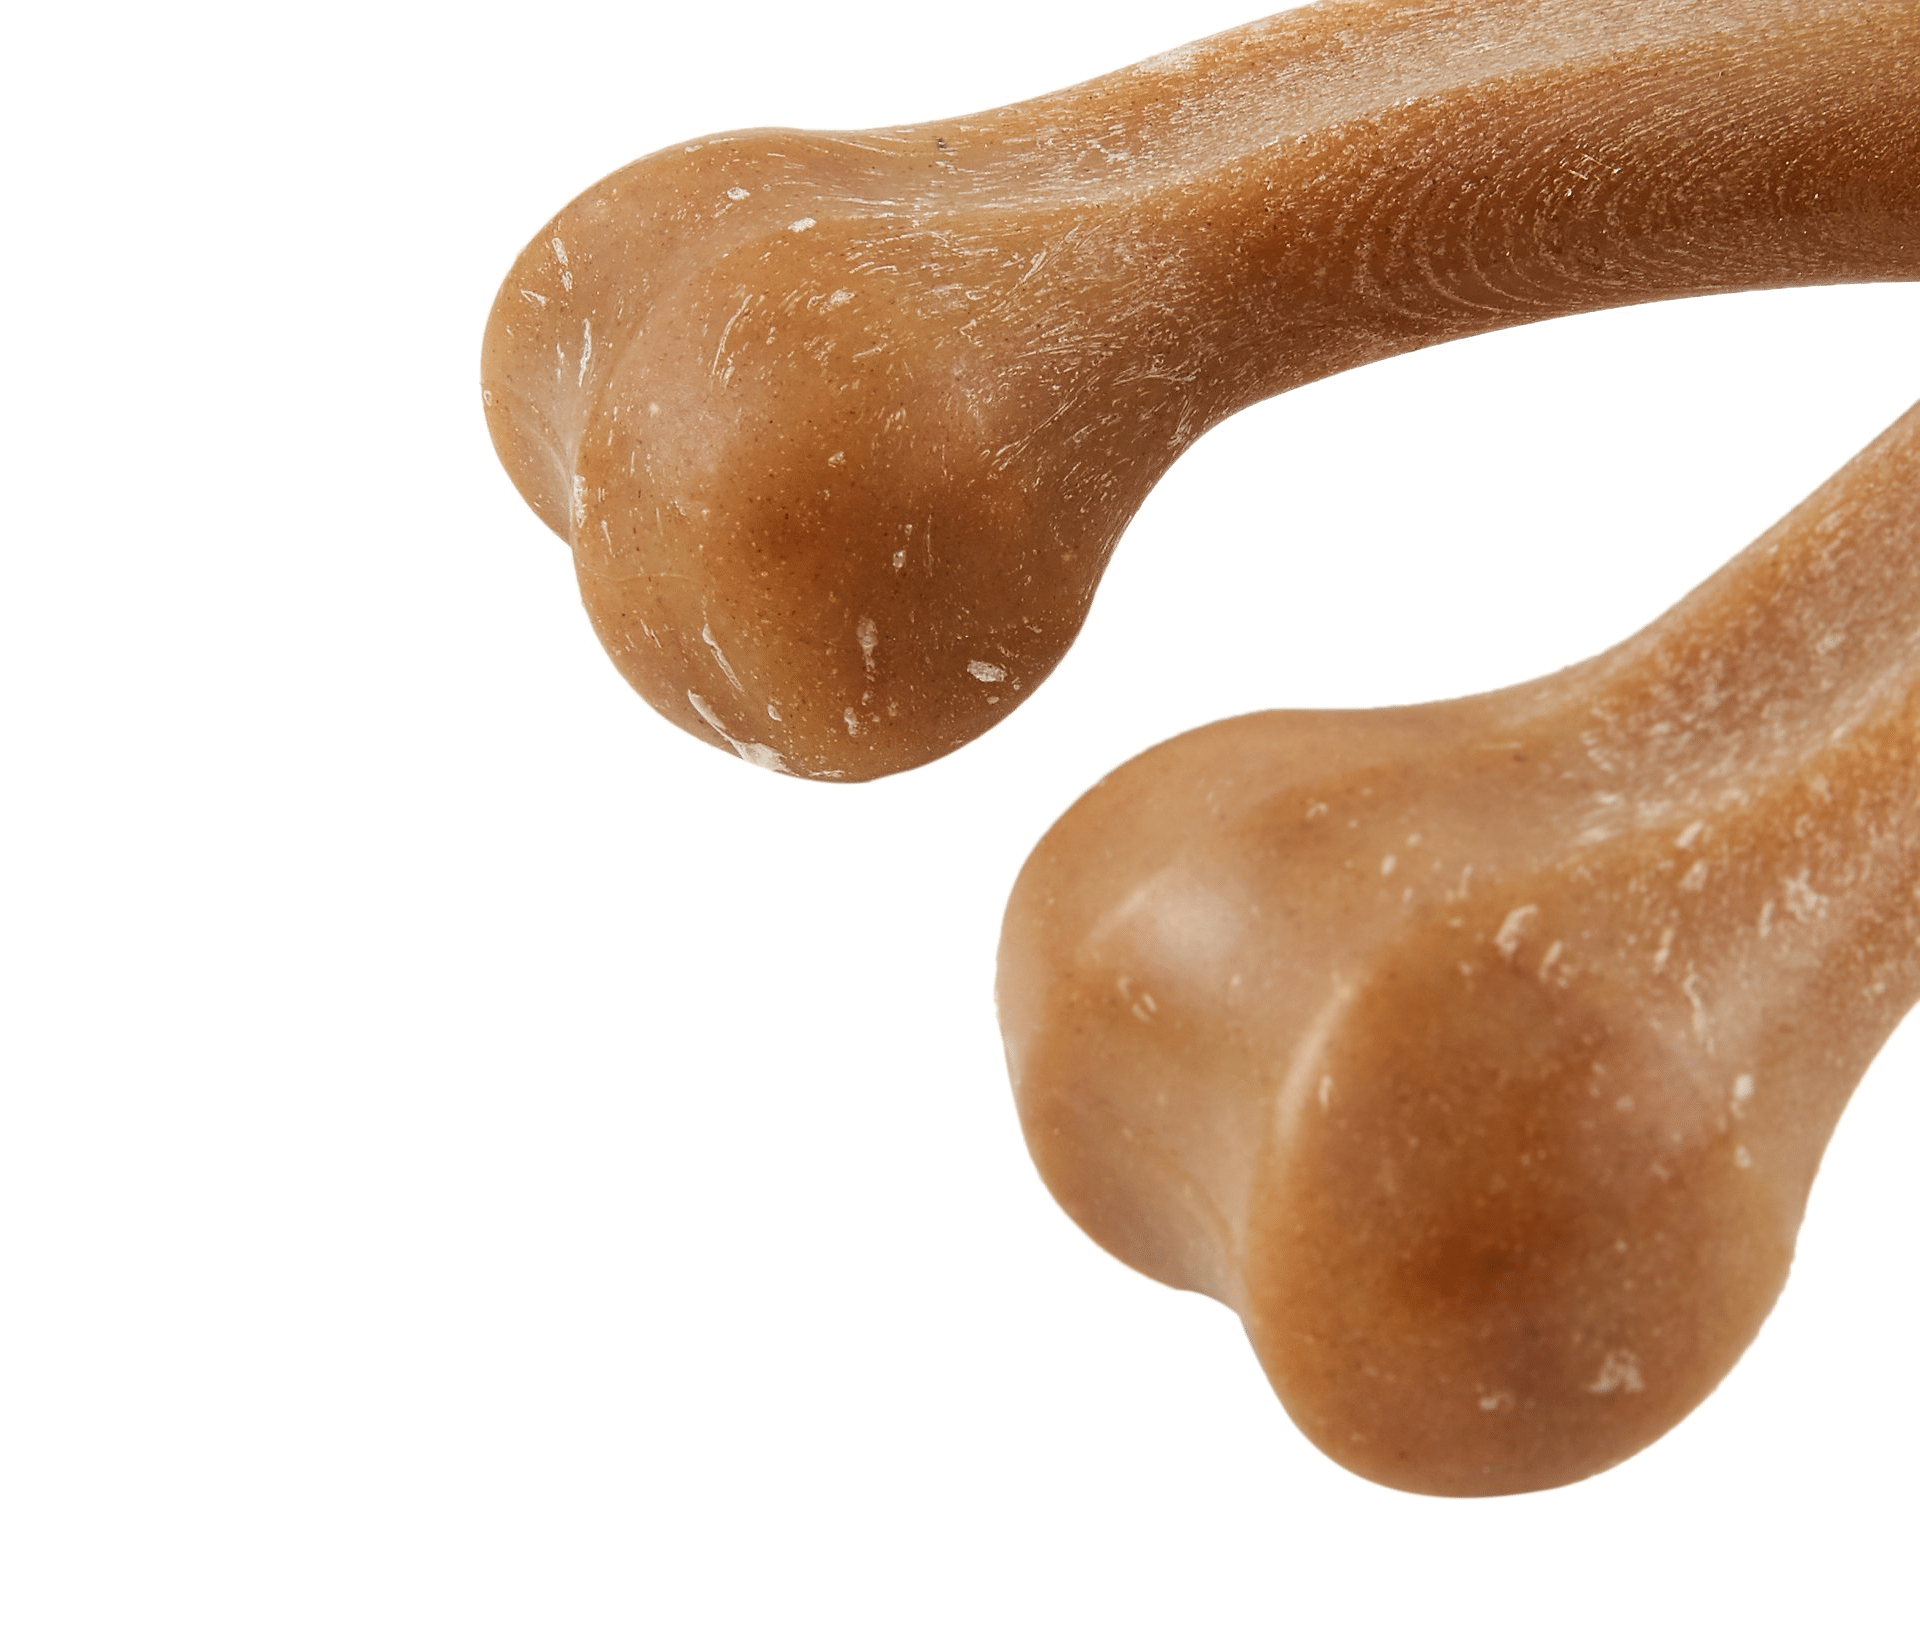 Benebone Bacon Flavored Wishbone Dog Chew Toy